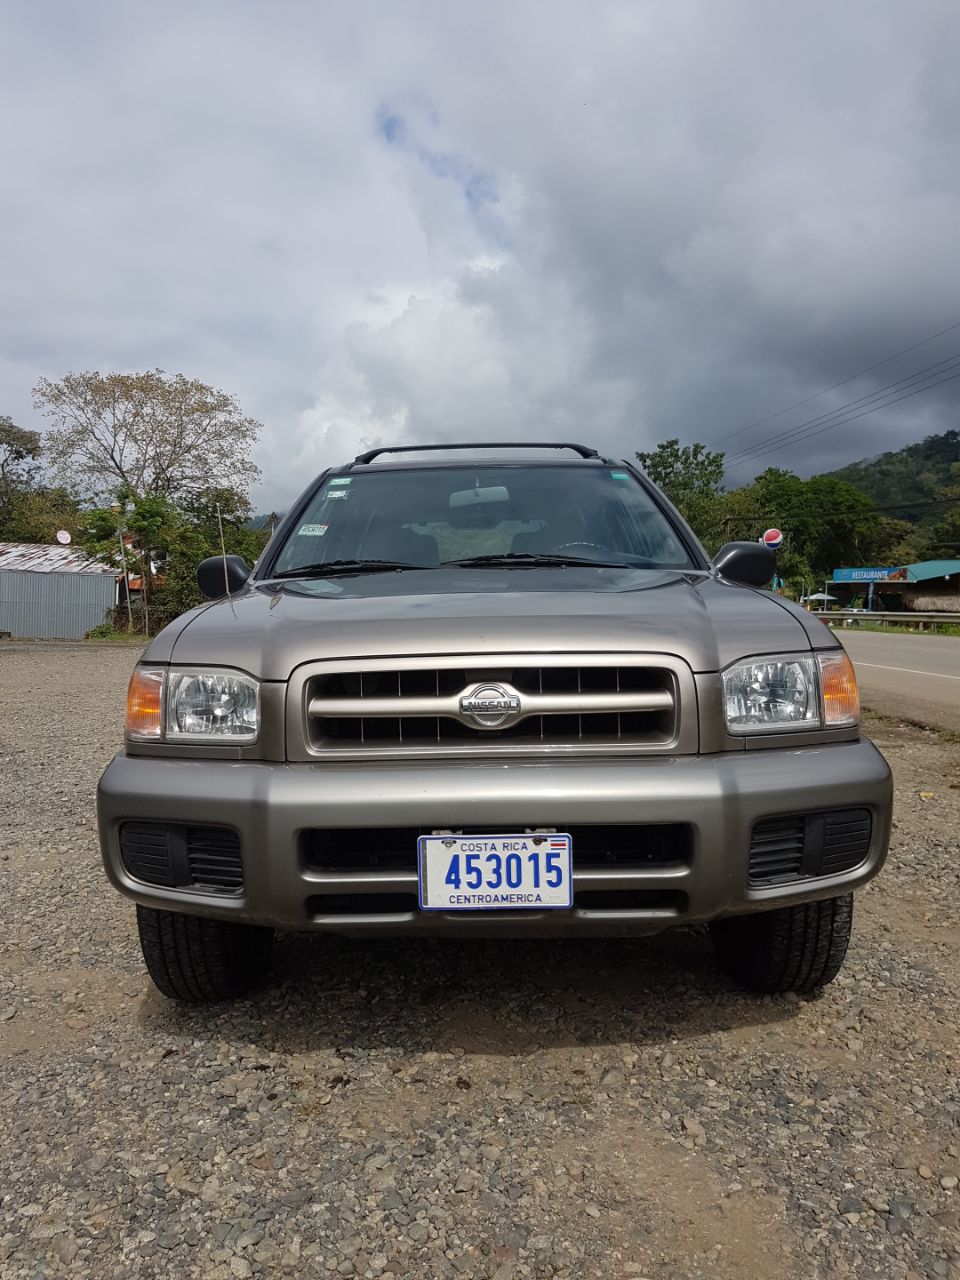 Nissan Pathfinder Bj 02 Km 161 000 Motortyp Vg33 4x4 Allrad Benziner 3 Liter Costa Rica Immobilien